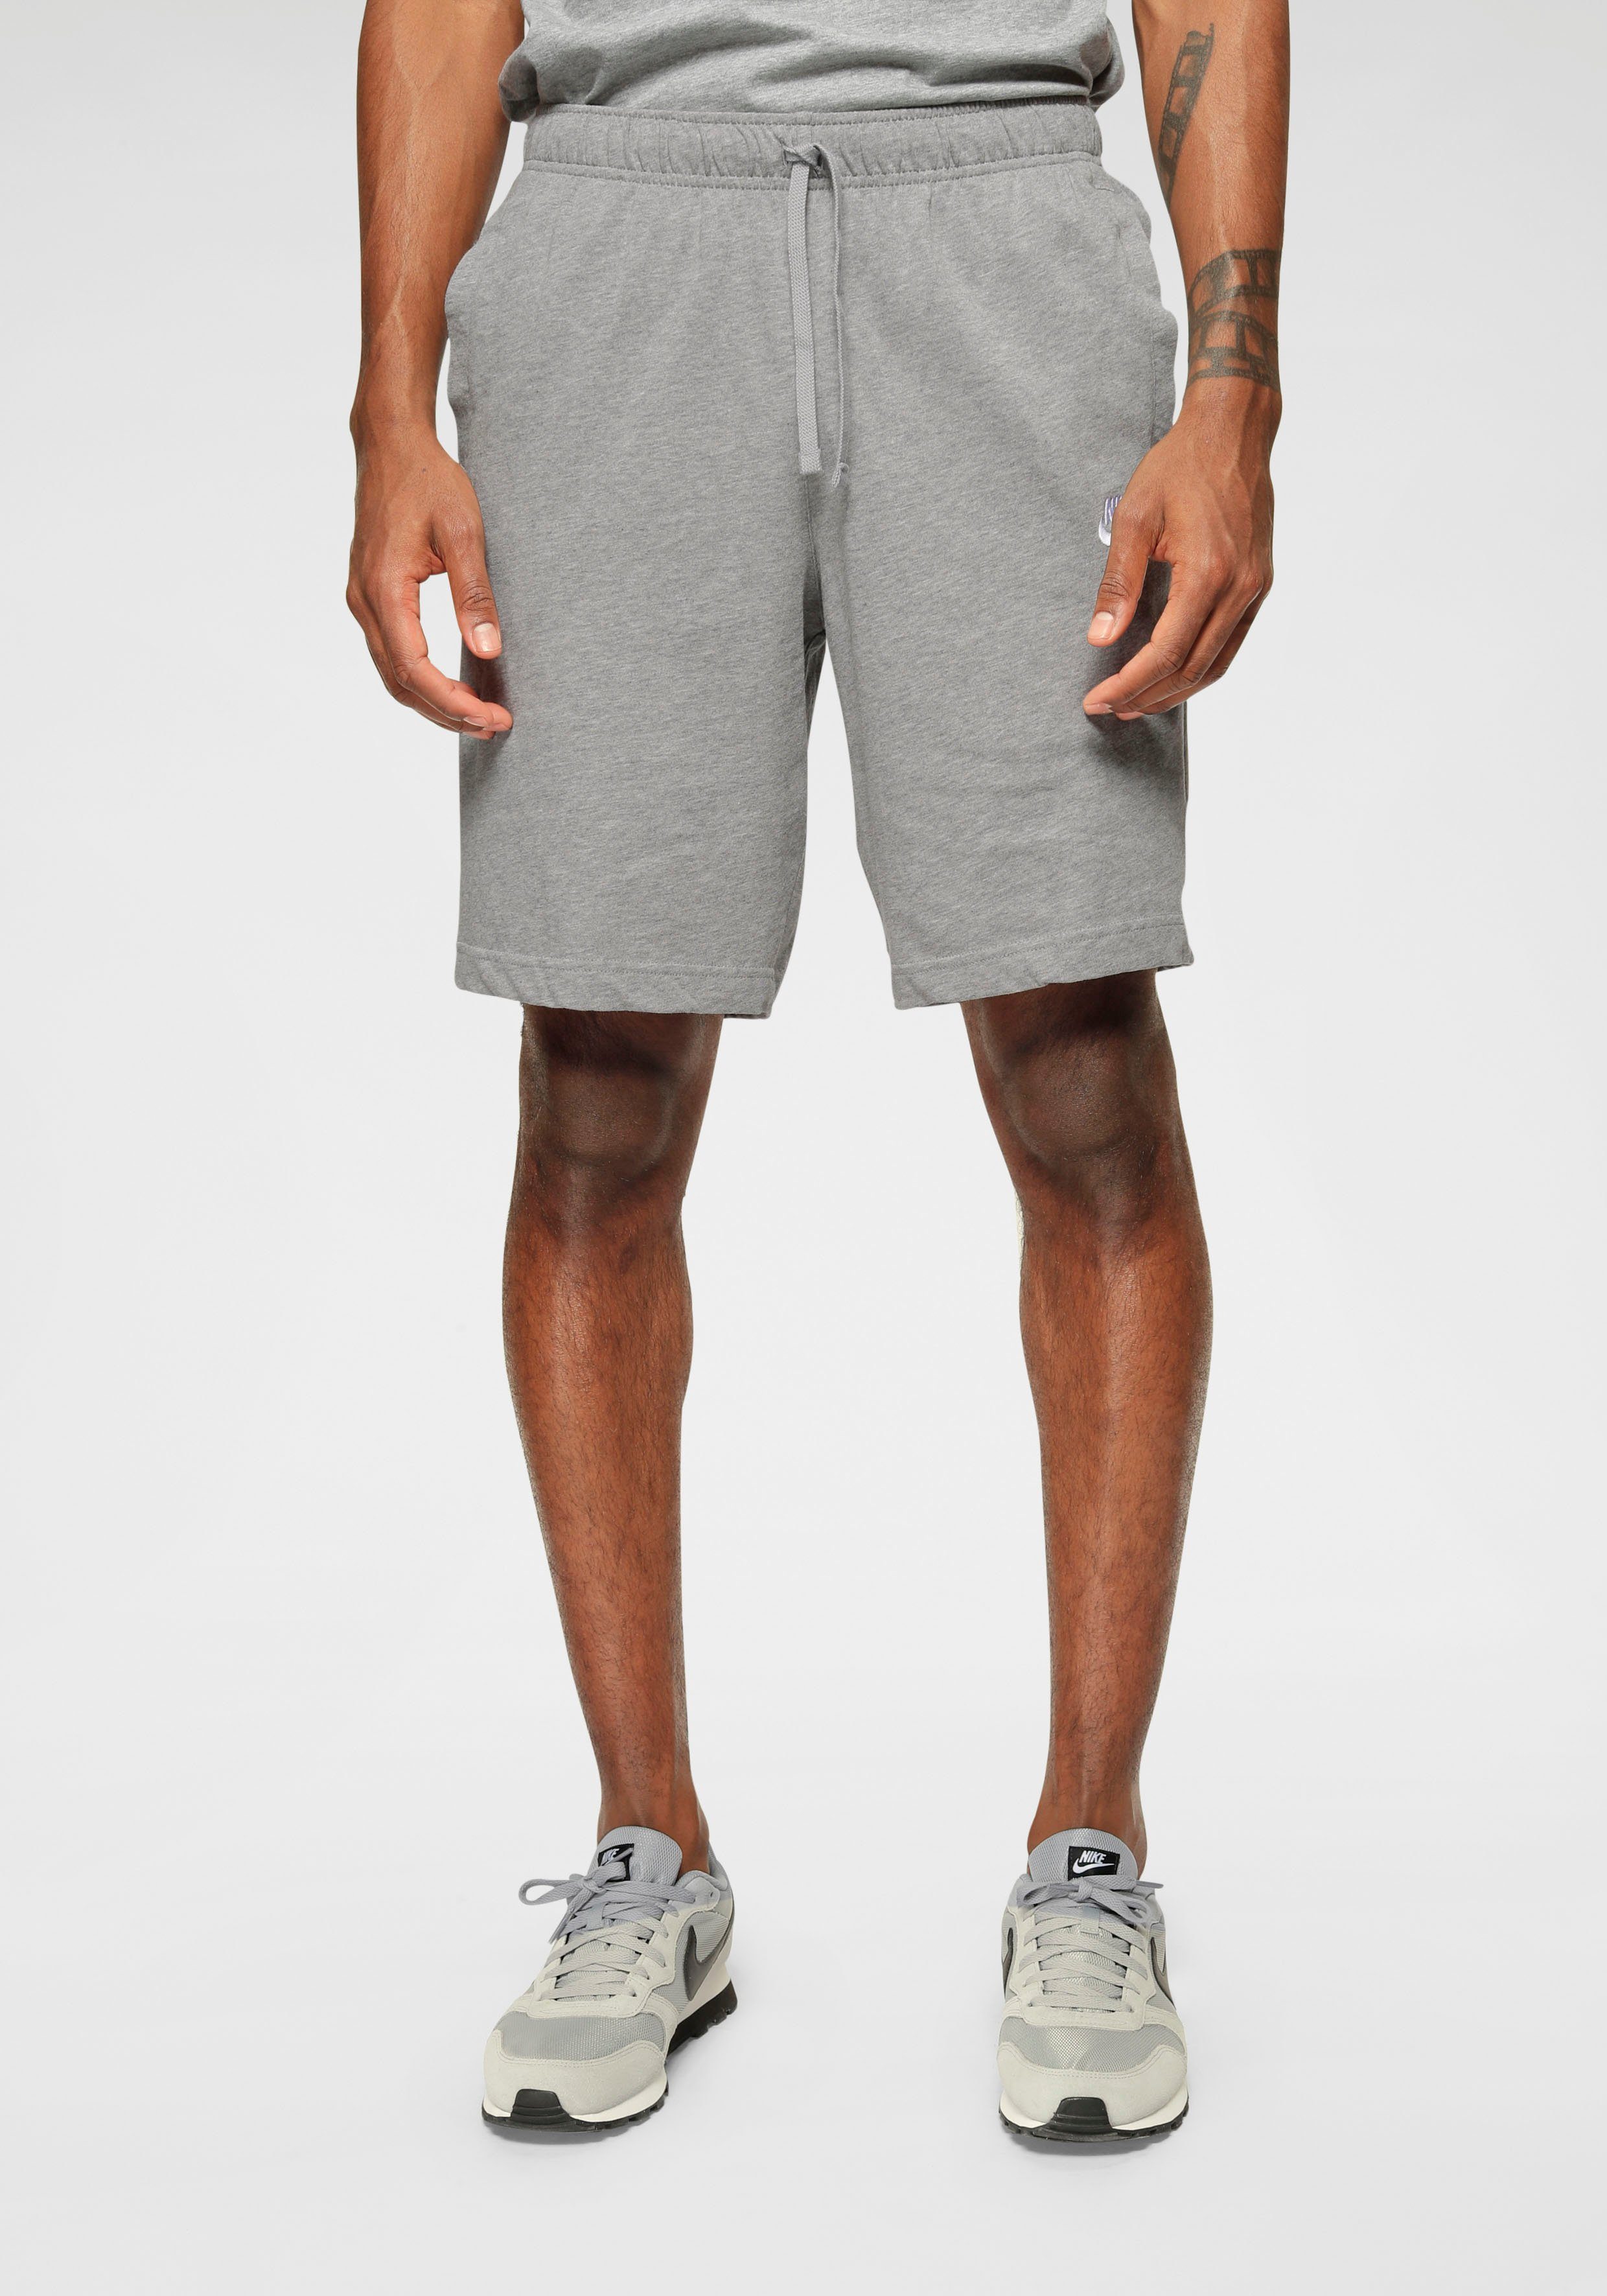 Nike Sportswear Shorts Club Men's Shorts hellgrau-meliert